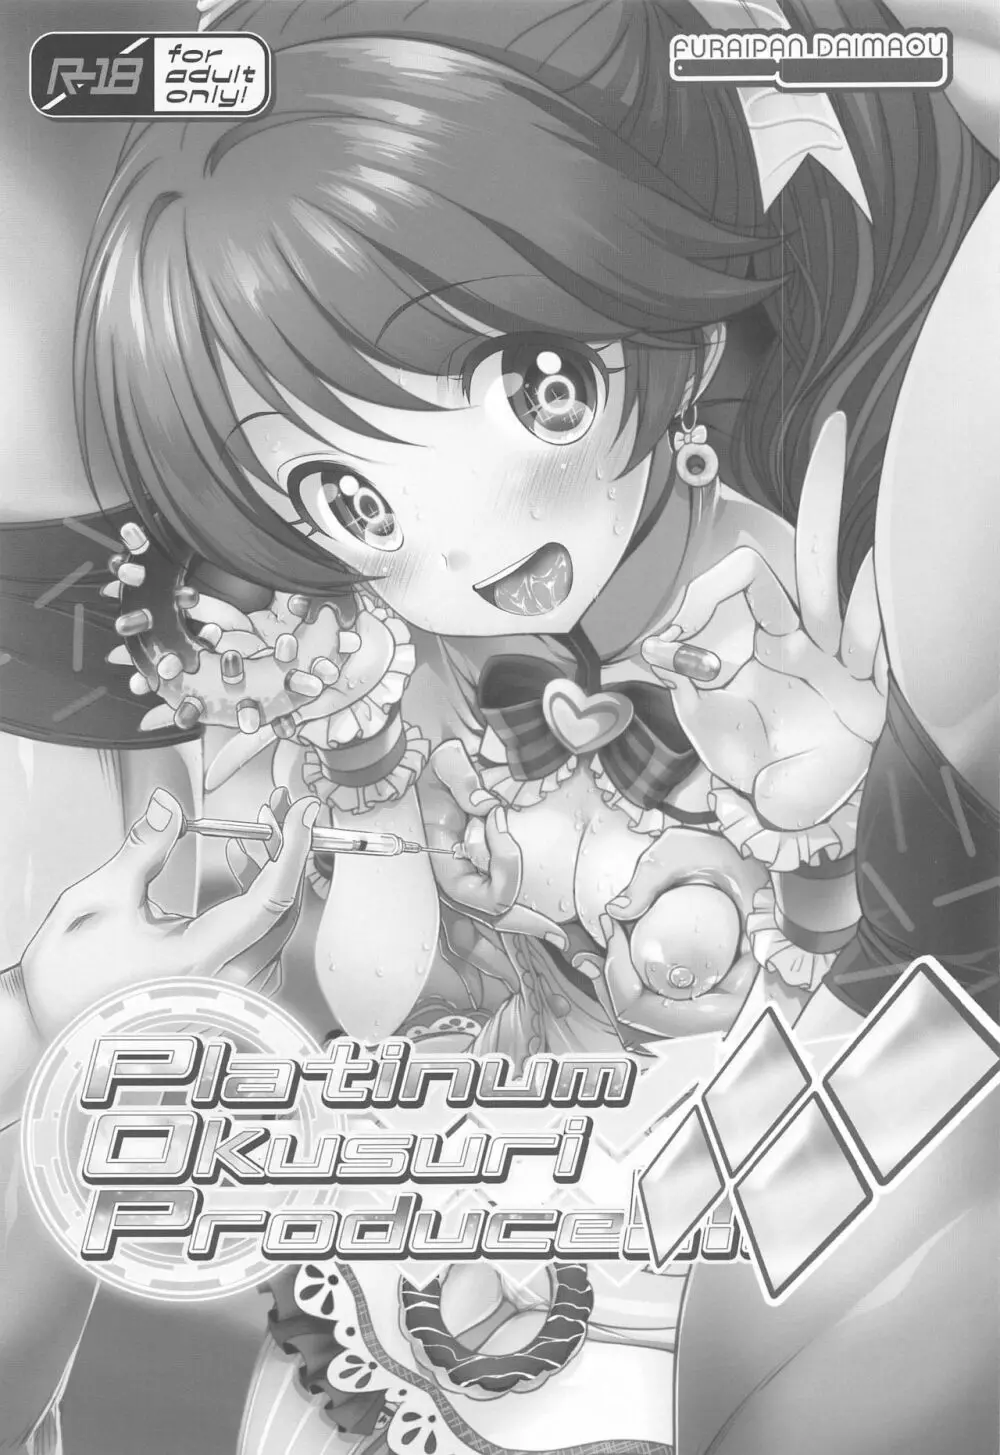 Platinum Okusuri Produce!!!! ◇◇◇◇ - page2